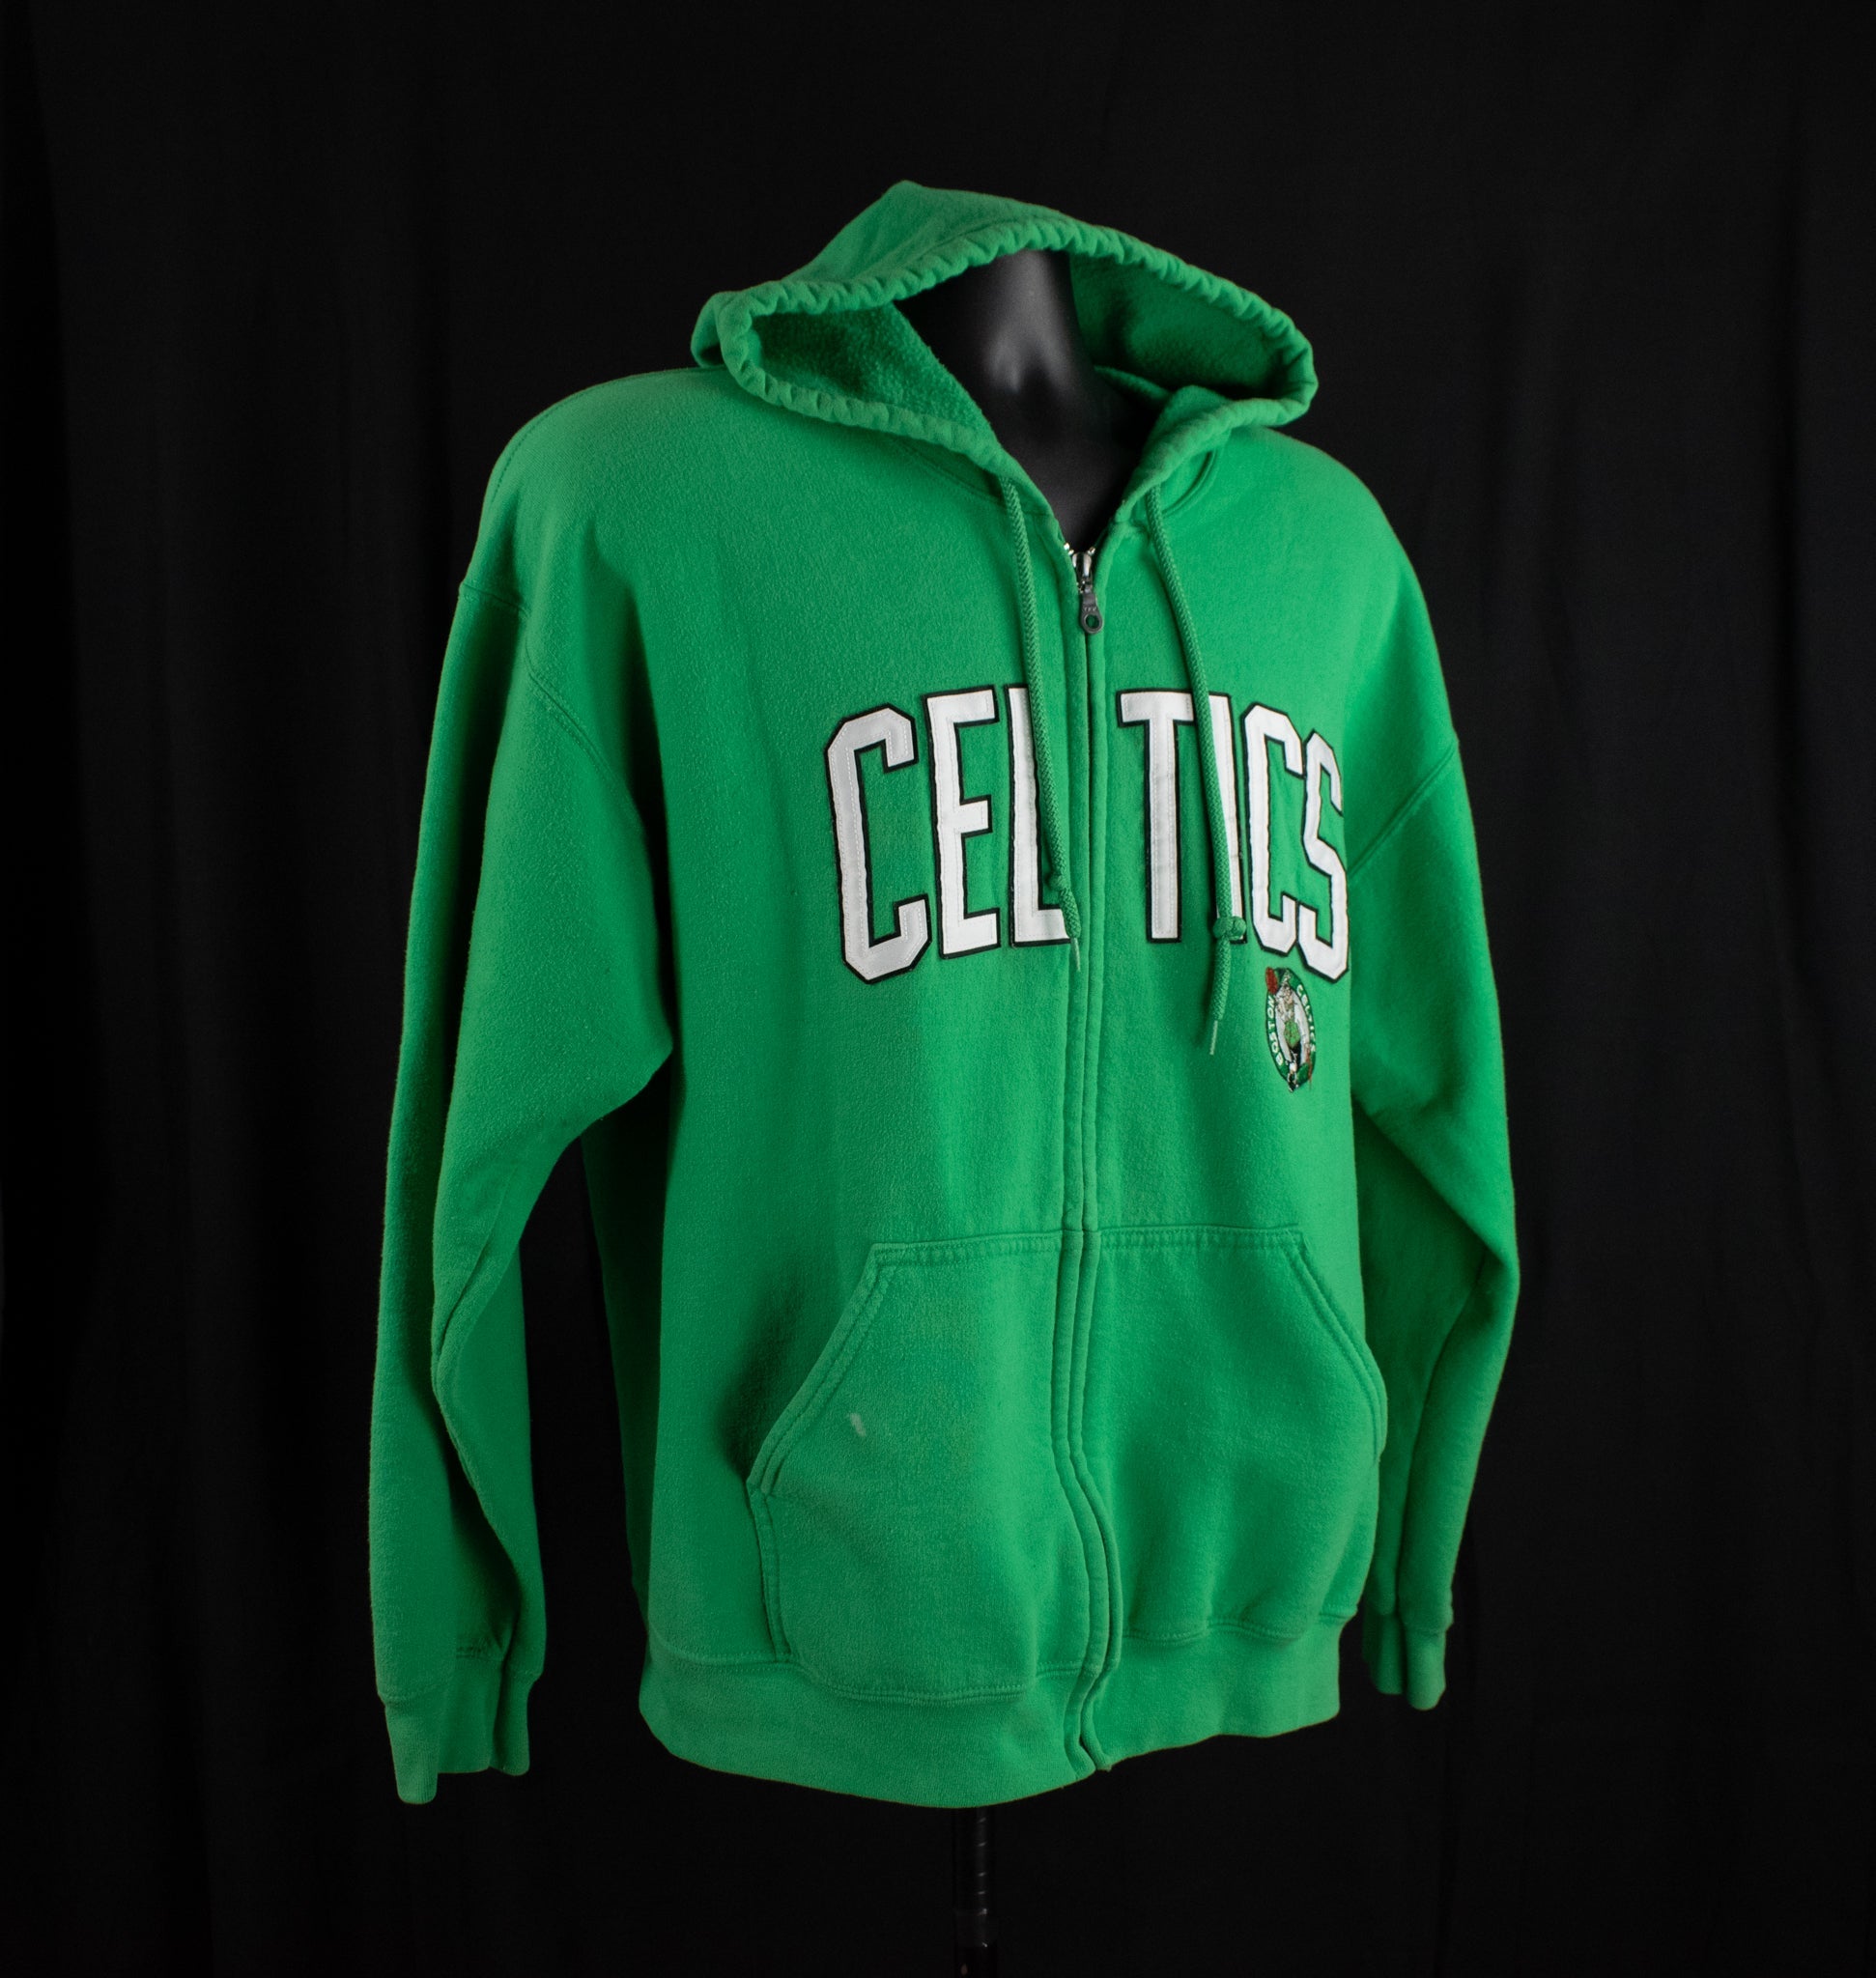 Celtics Basketball Sweatshirt Green Zip Up Hoodie Large Adult Mens NBA